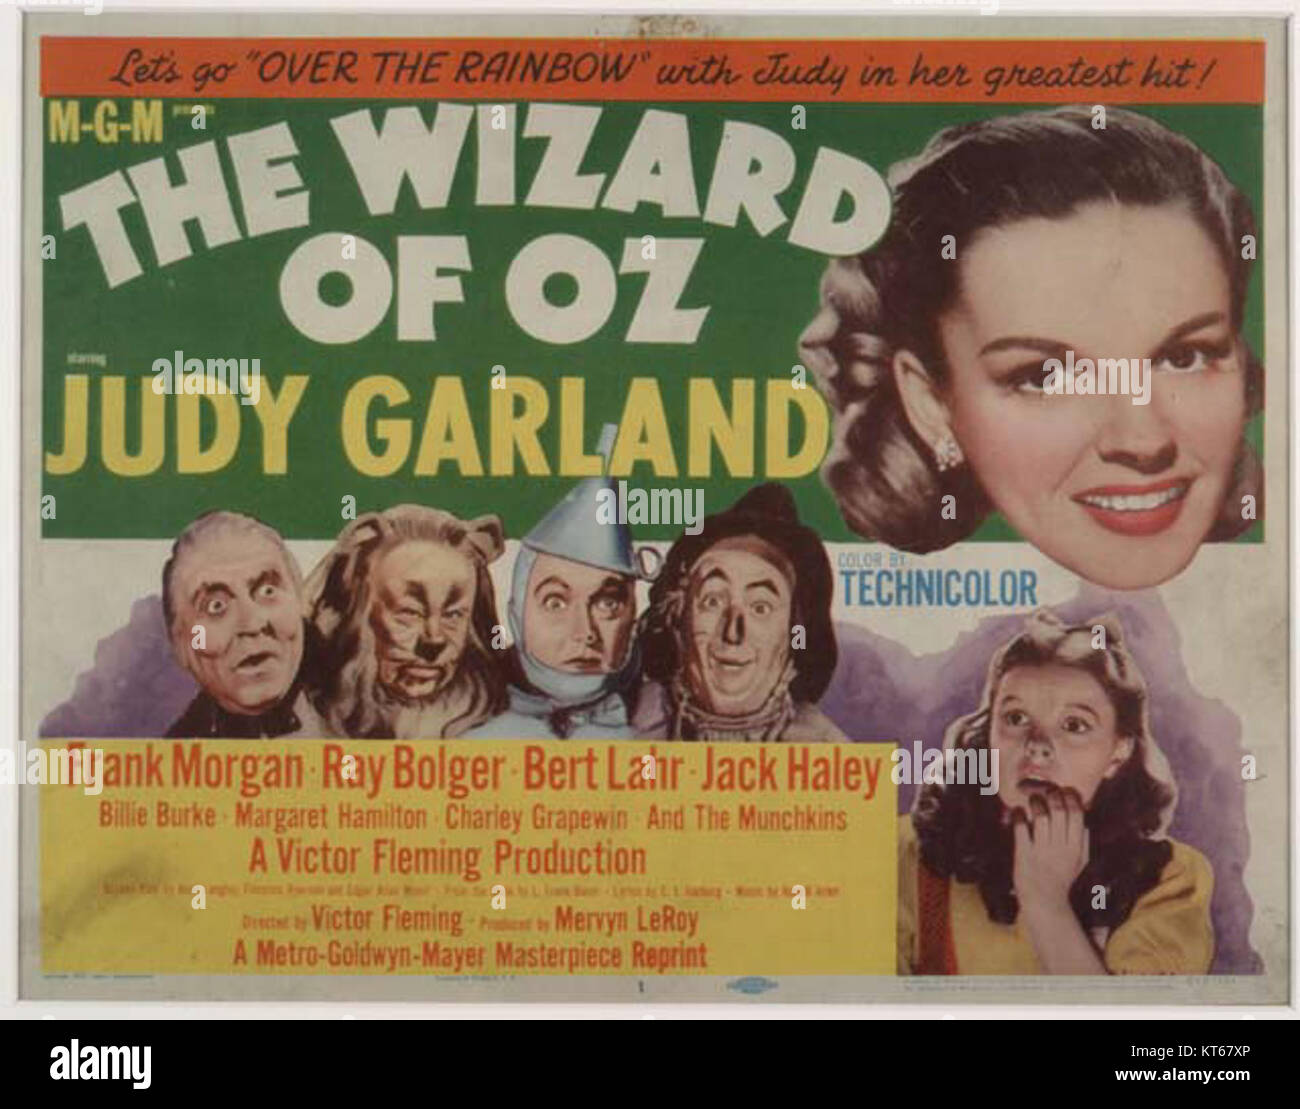 The Wizard of Oz 1955 Lobby Card Stock Photo